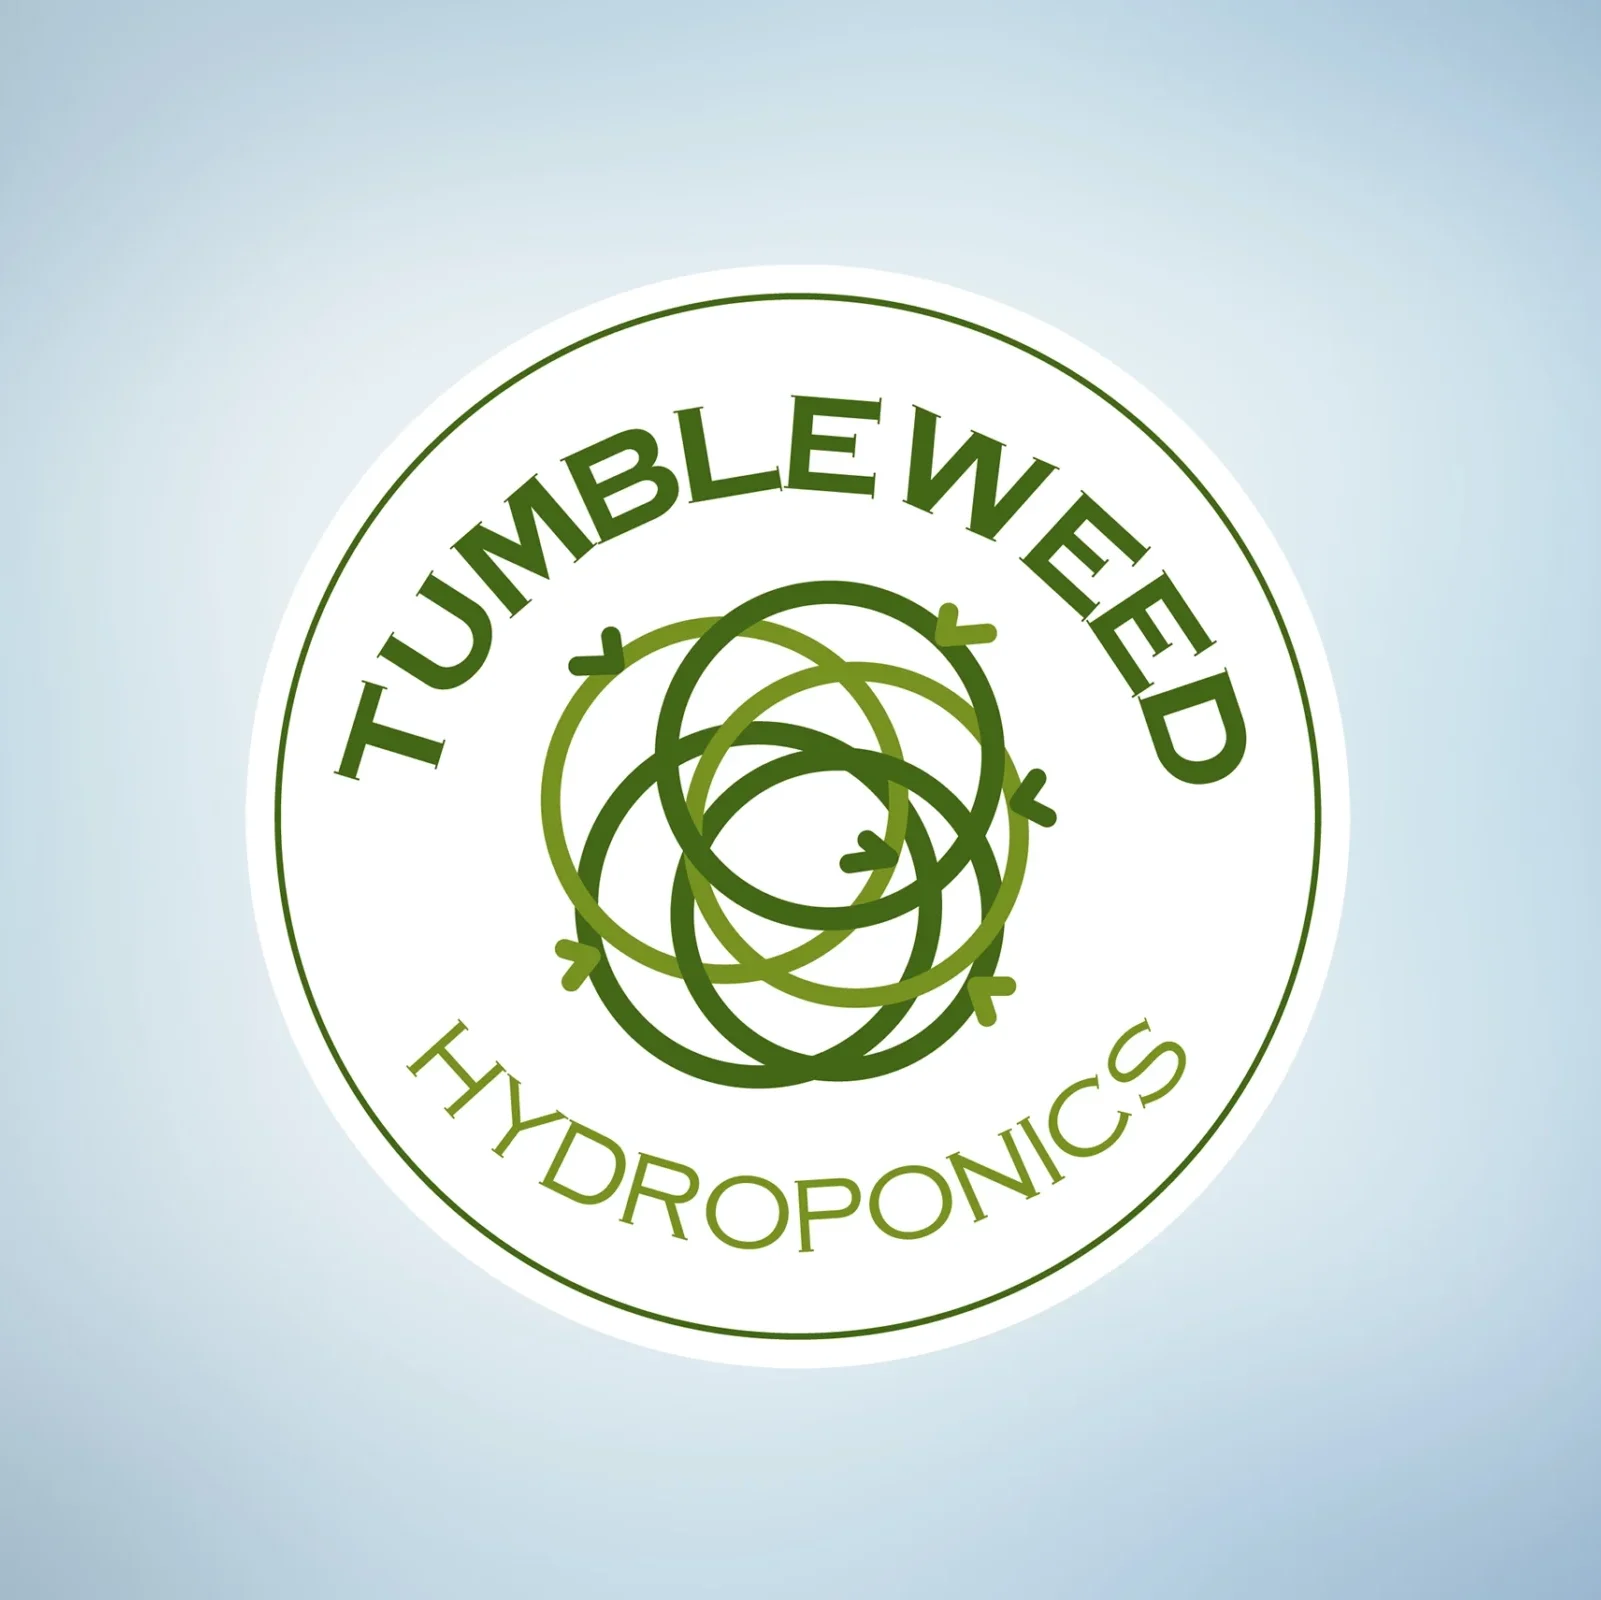 Tumbleweed Hydroponics